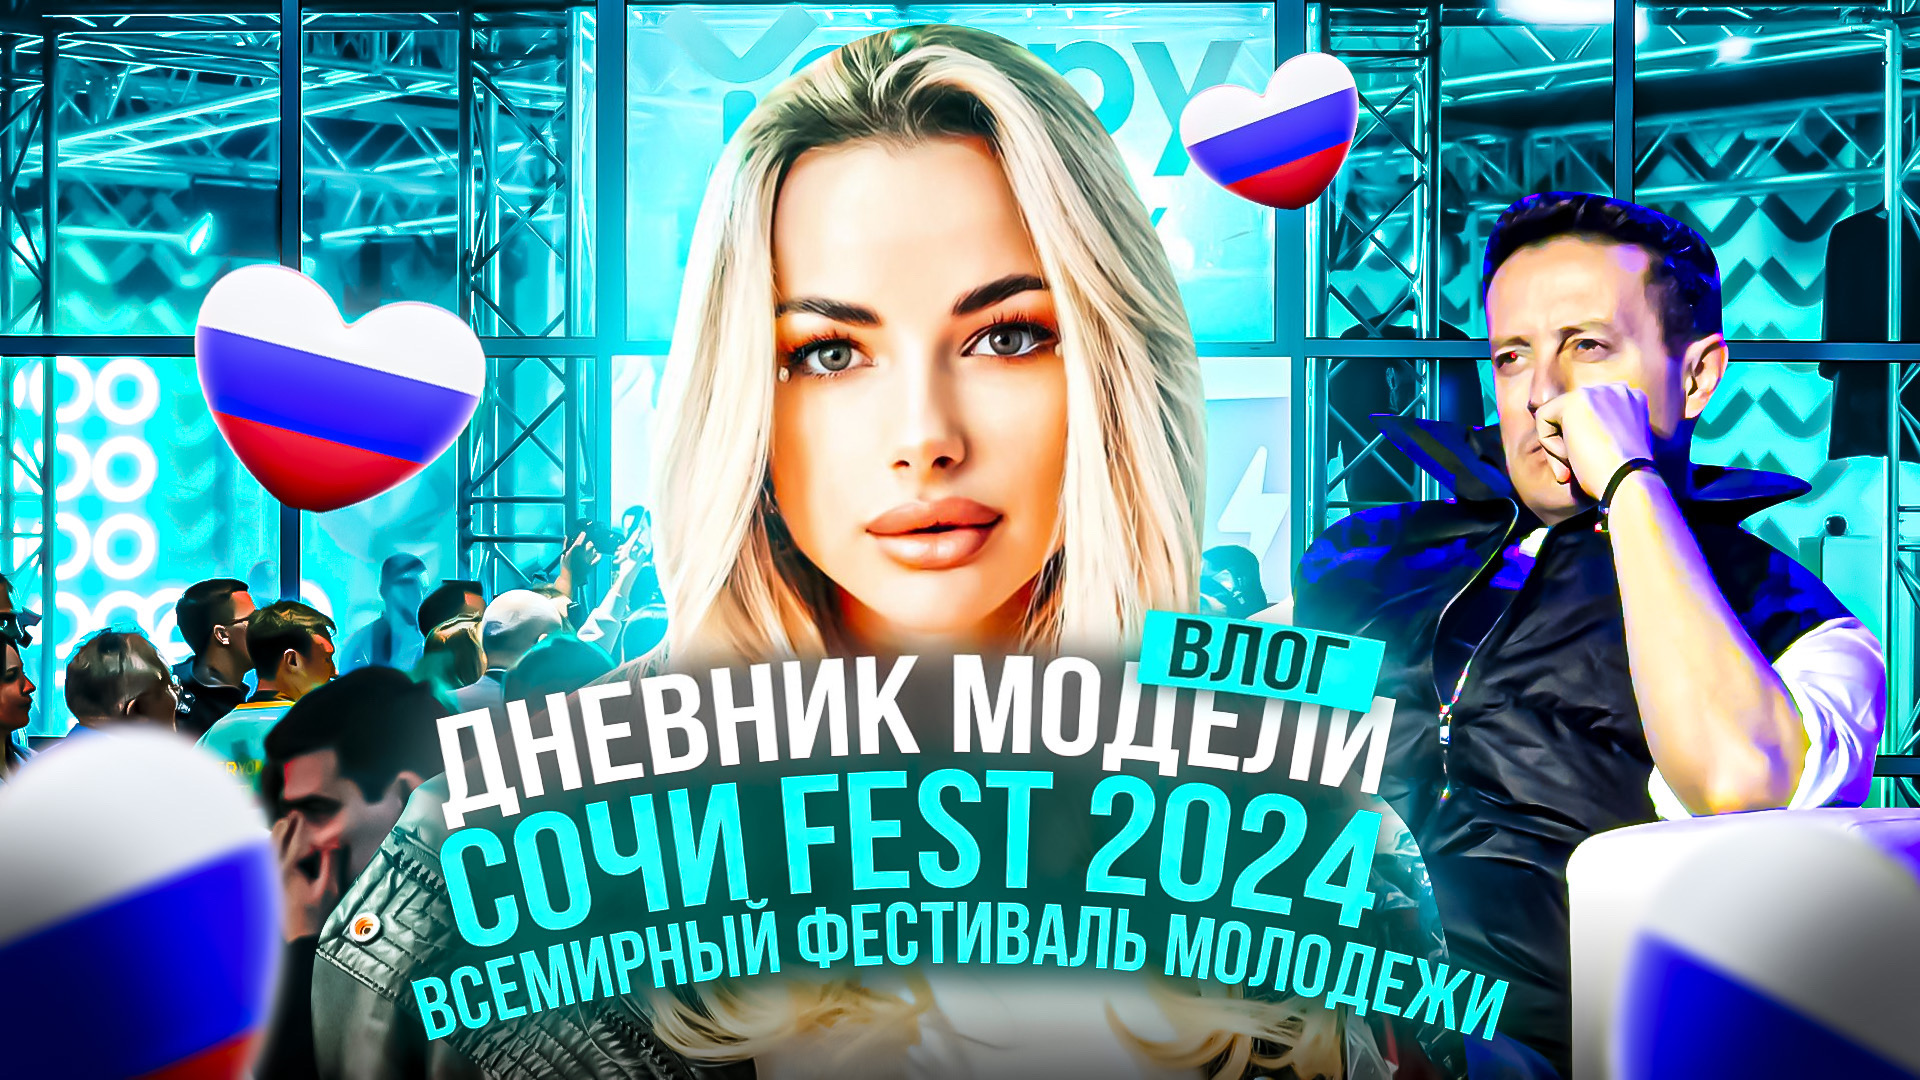 СОЧИ Fest 2024